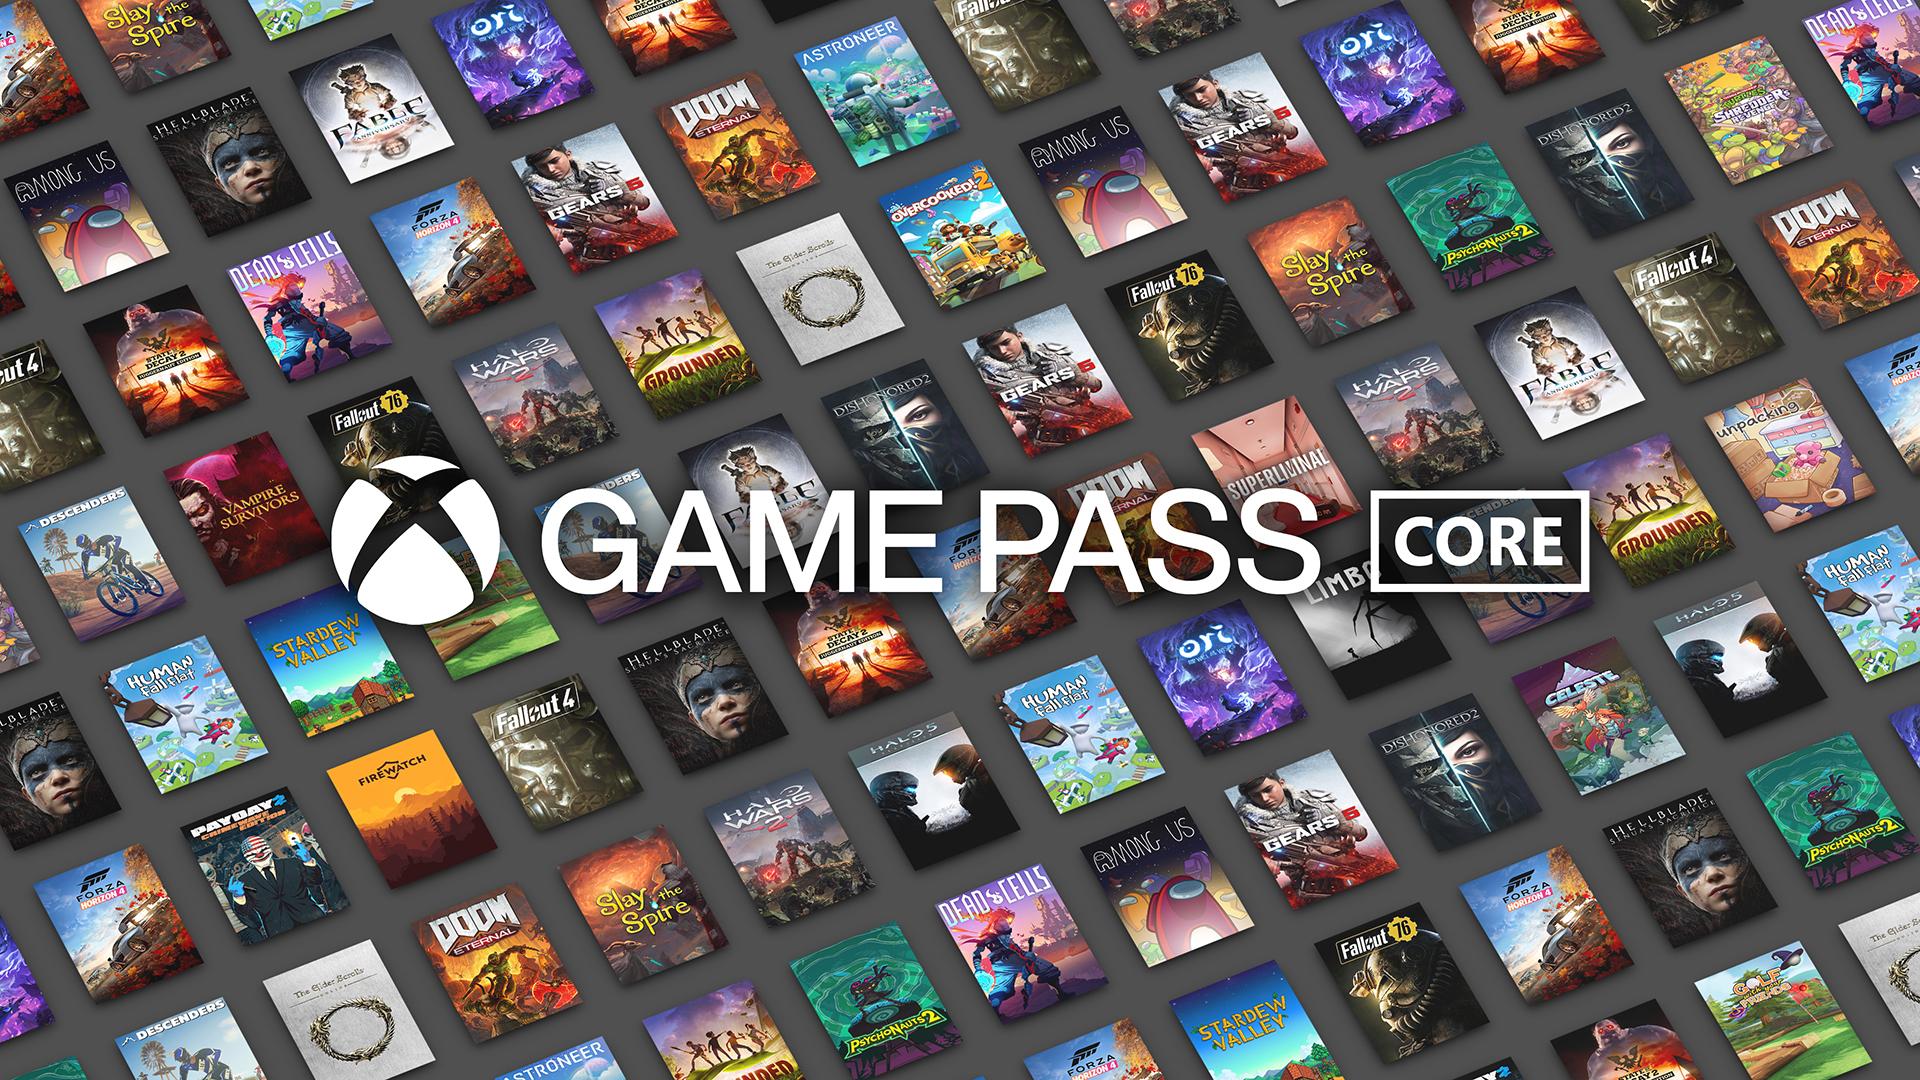 Her er listen over spill for Xbox Game Pass Core